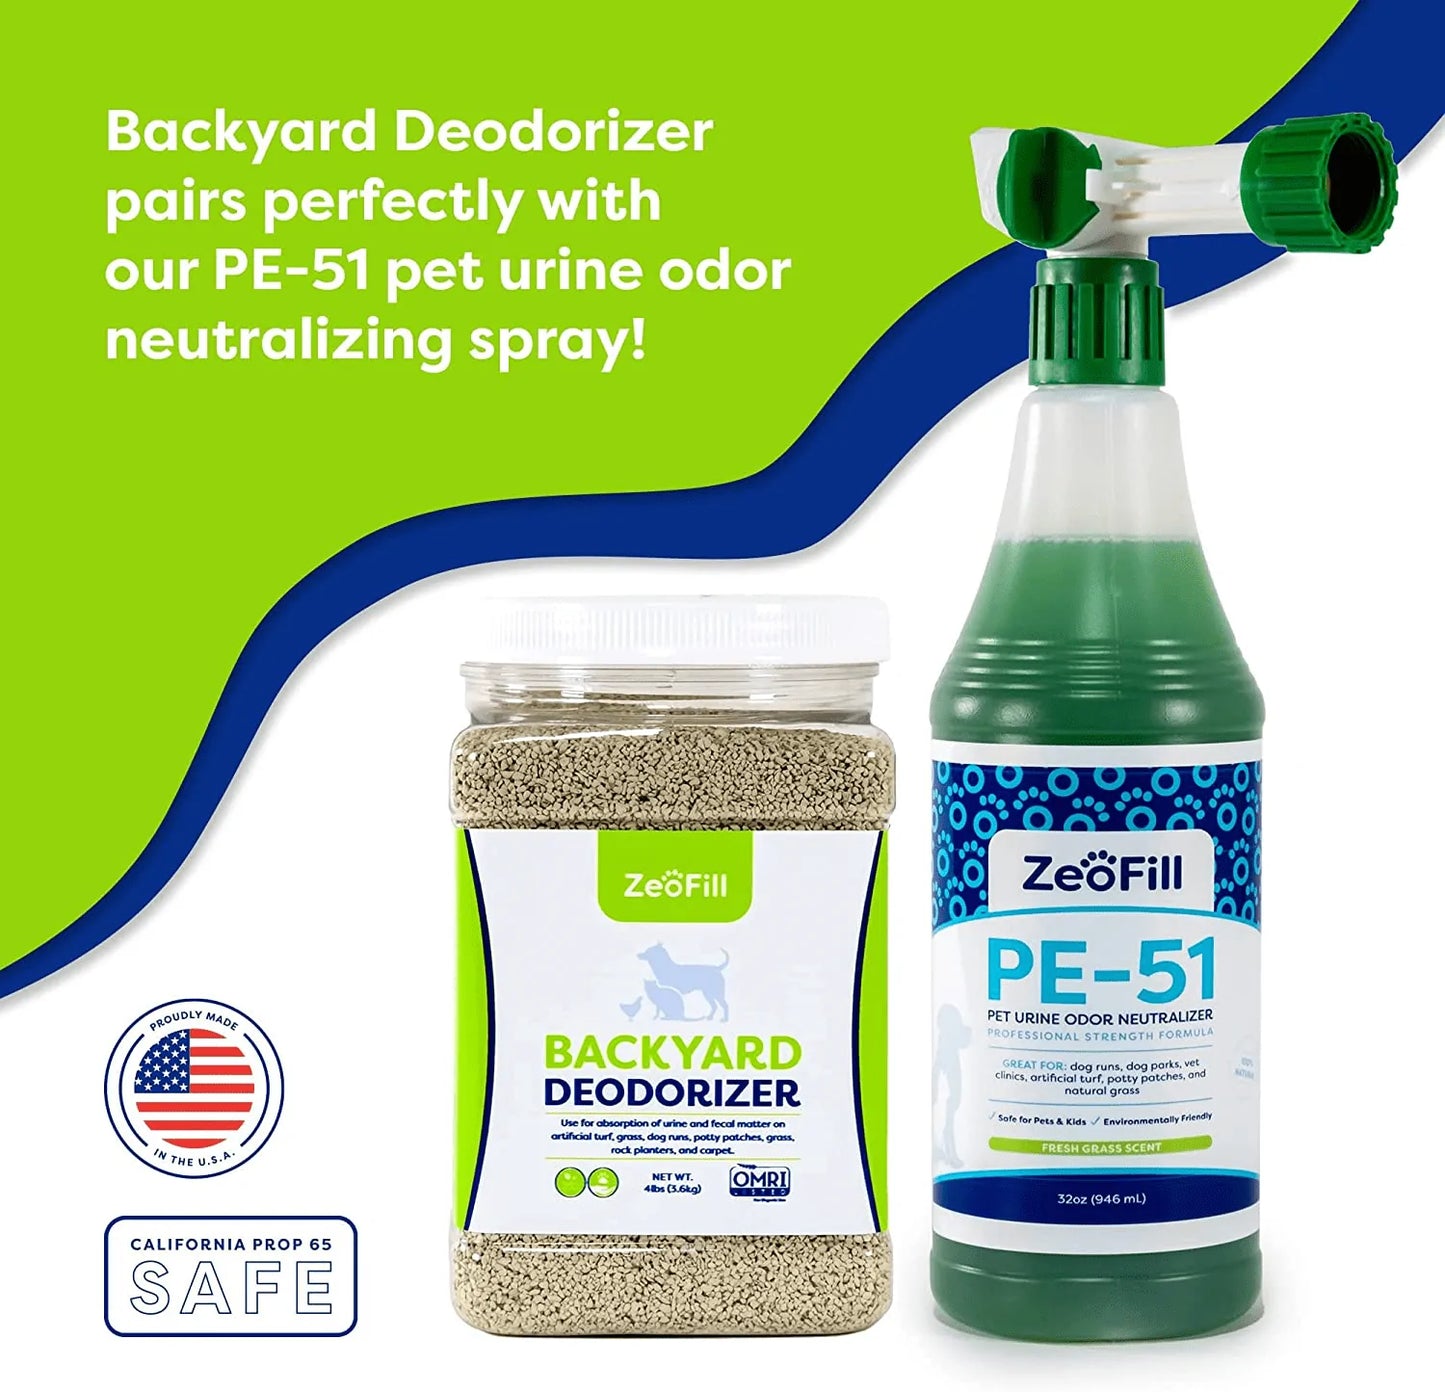 Zeofill Backyard Deodorizer - 8 Lbs. – Eliminates Pet Urine Odors on Potty Patches, Artificial Turf, Grass Lawns, Patios, Gravel, Concrete & Playgrounds – Odor Eliminator & Deodorizer